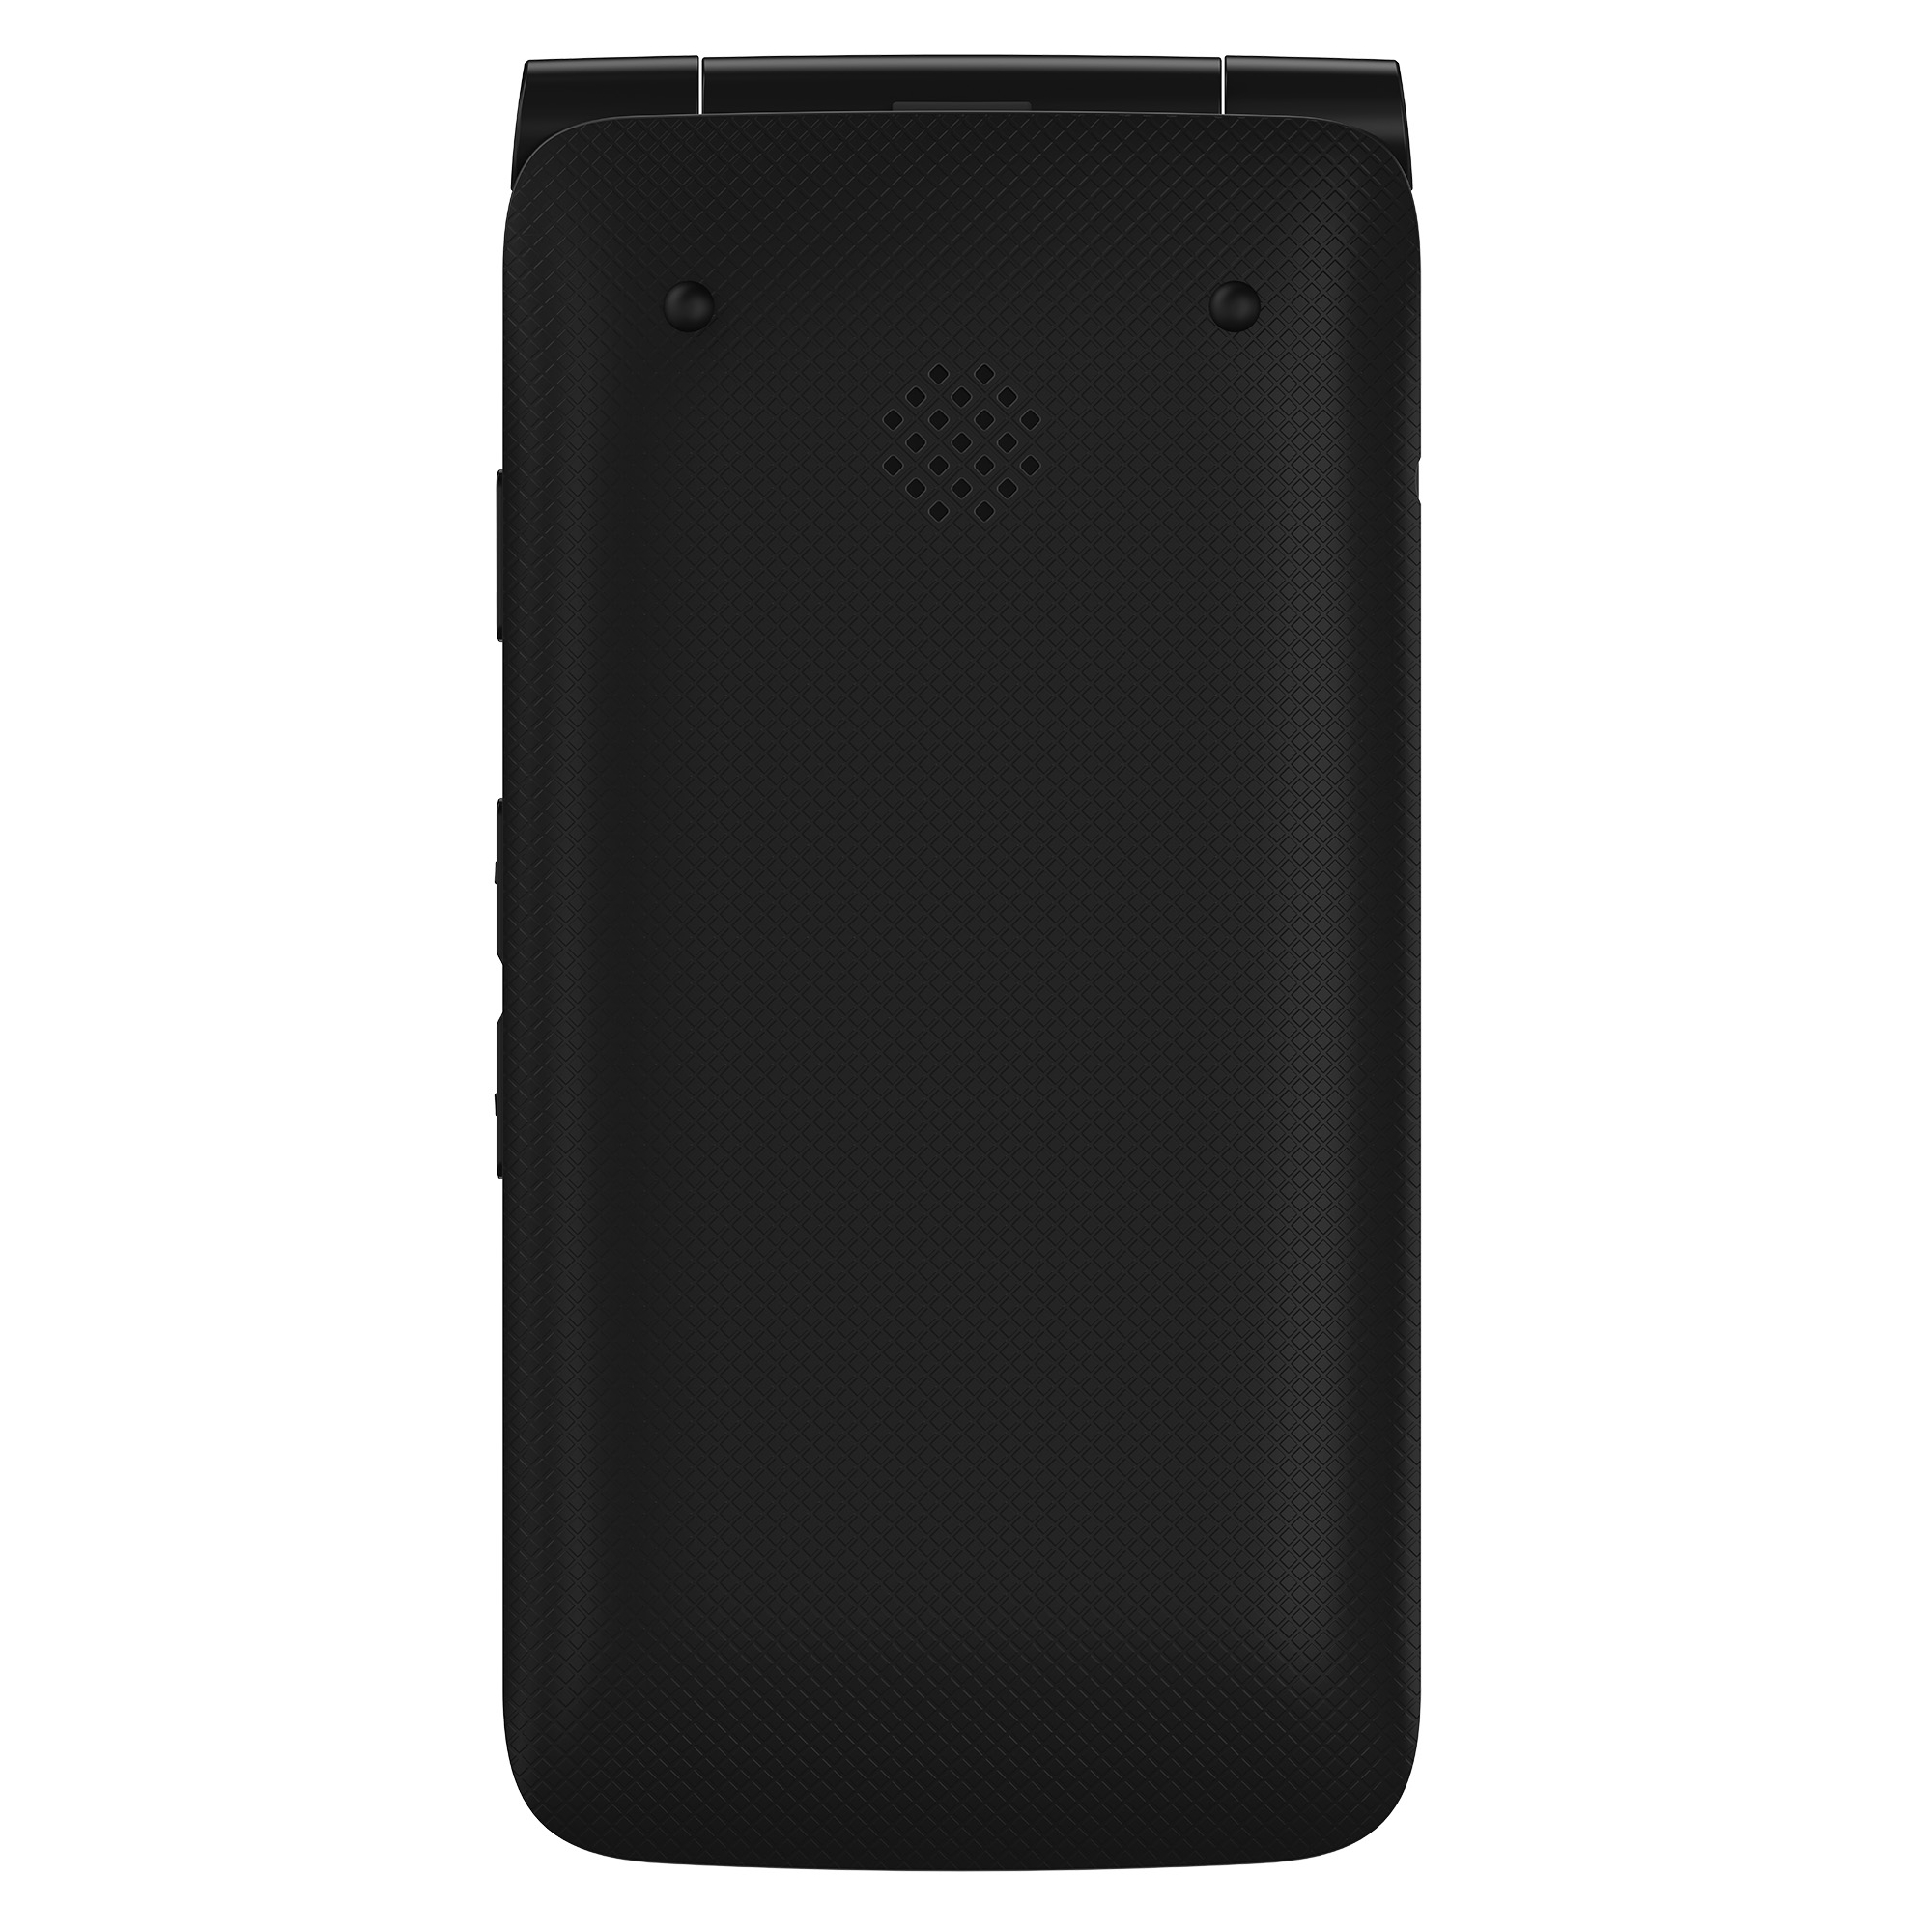 AT&T Cingular Flip 2, 25GB, Black - Prepaid Phone - image 3 of 3